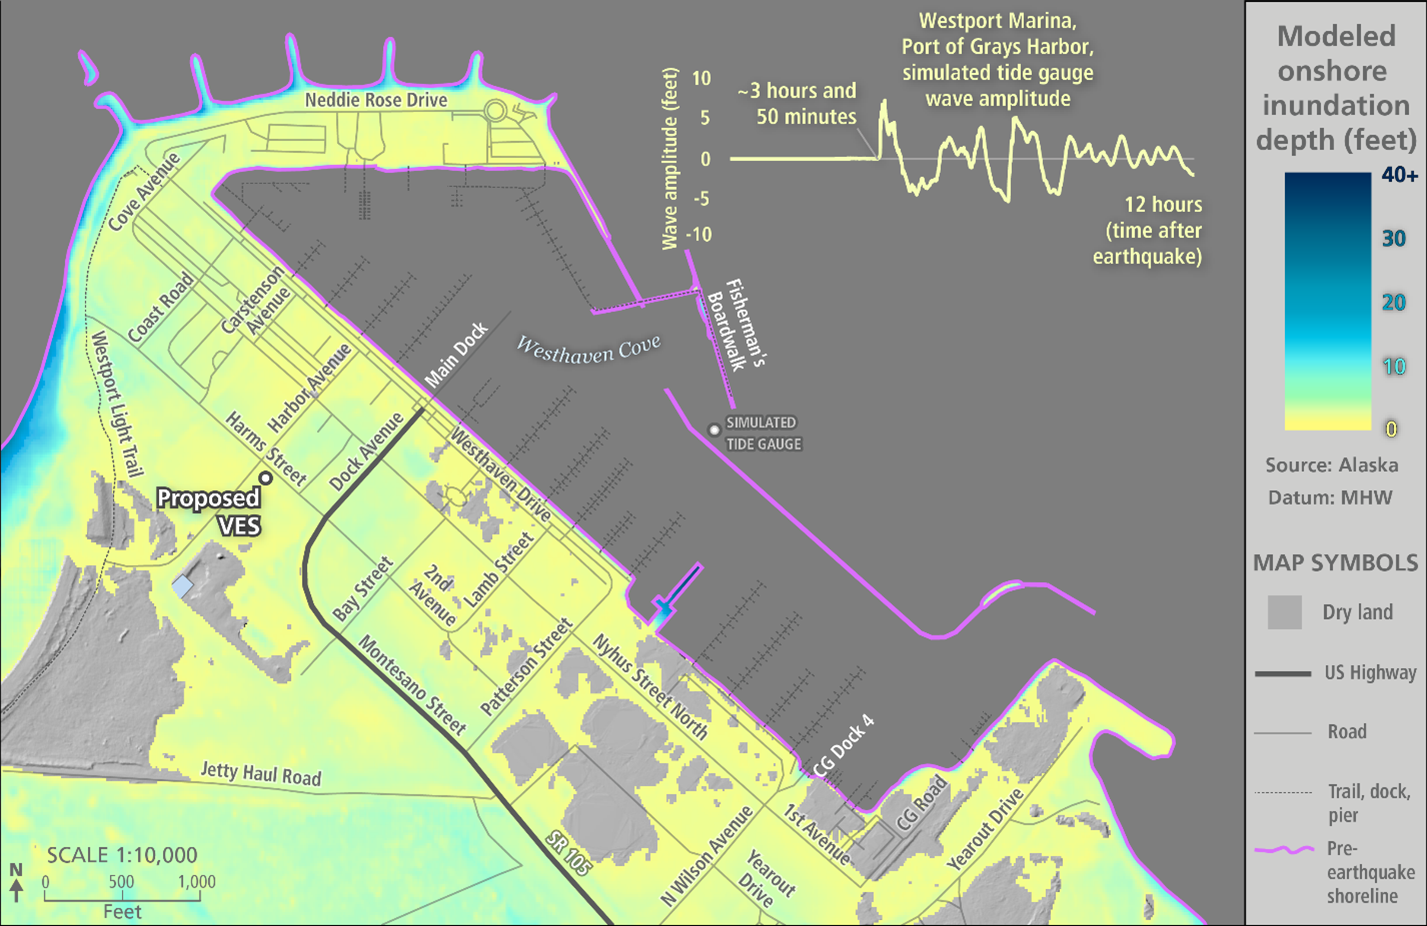 A tsunami strategy for the Westport Marina